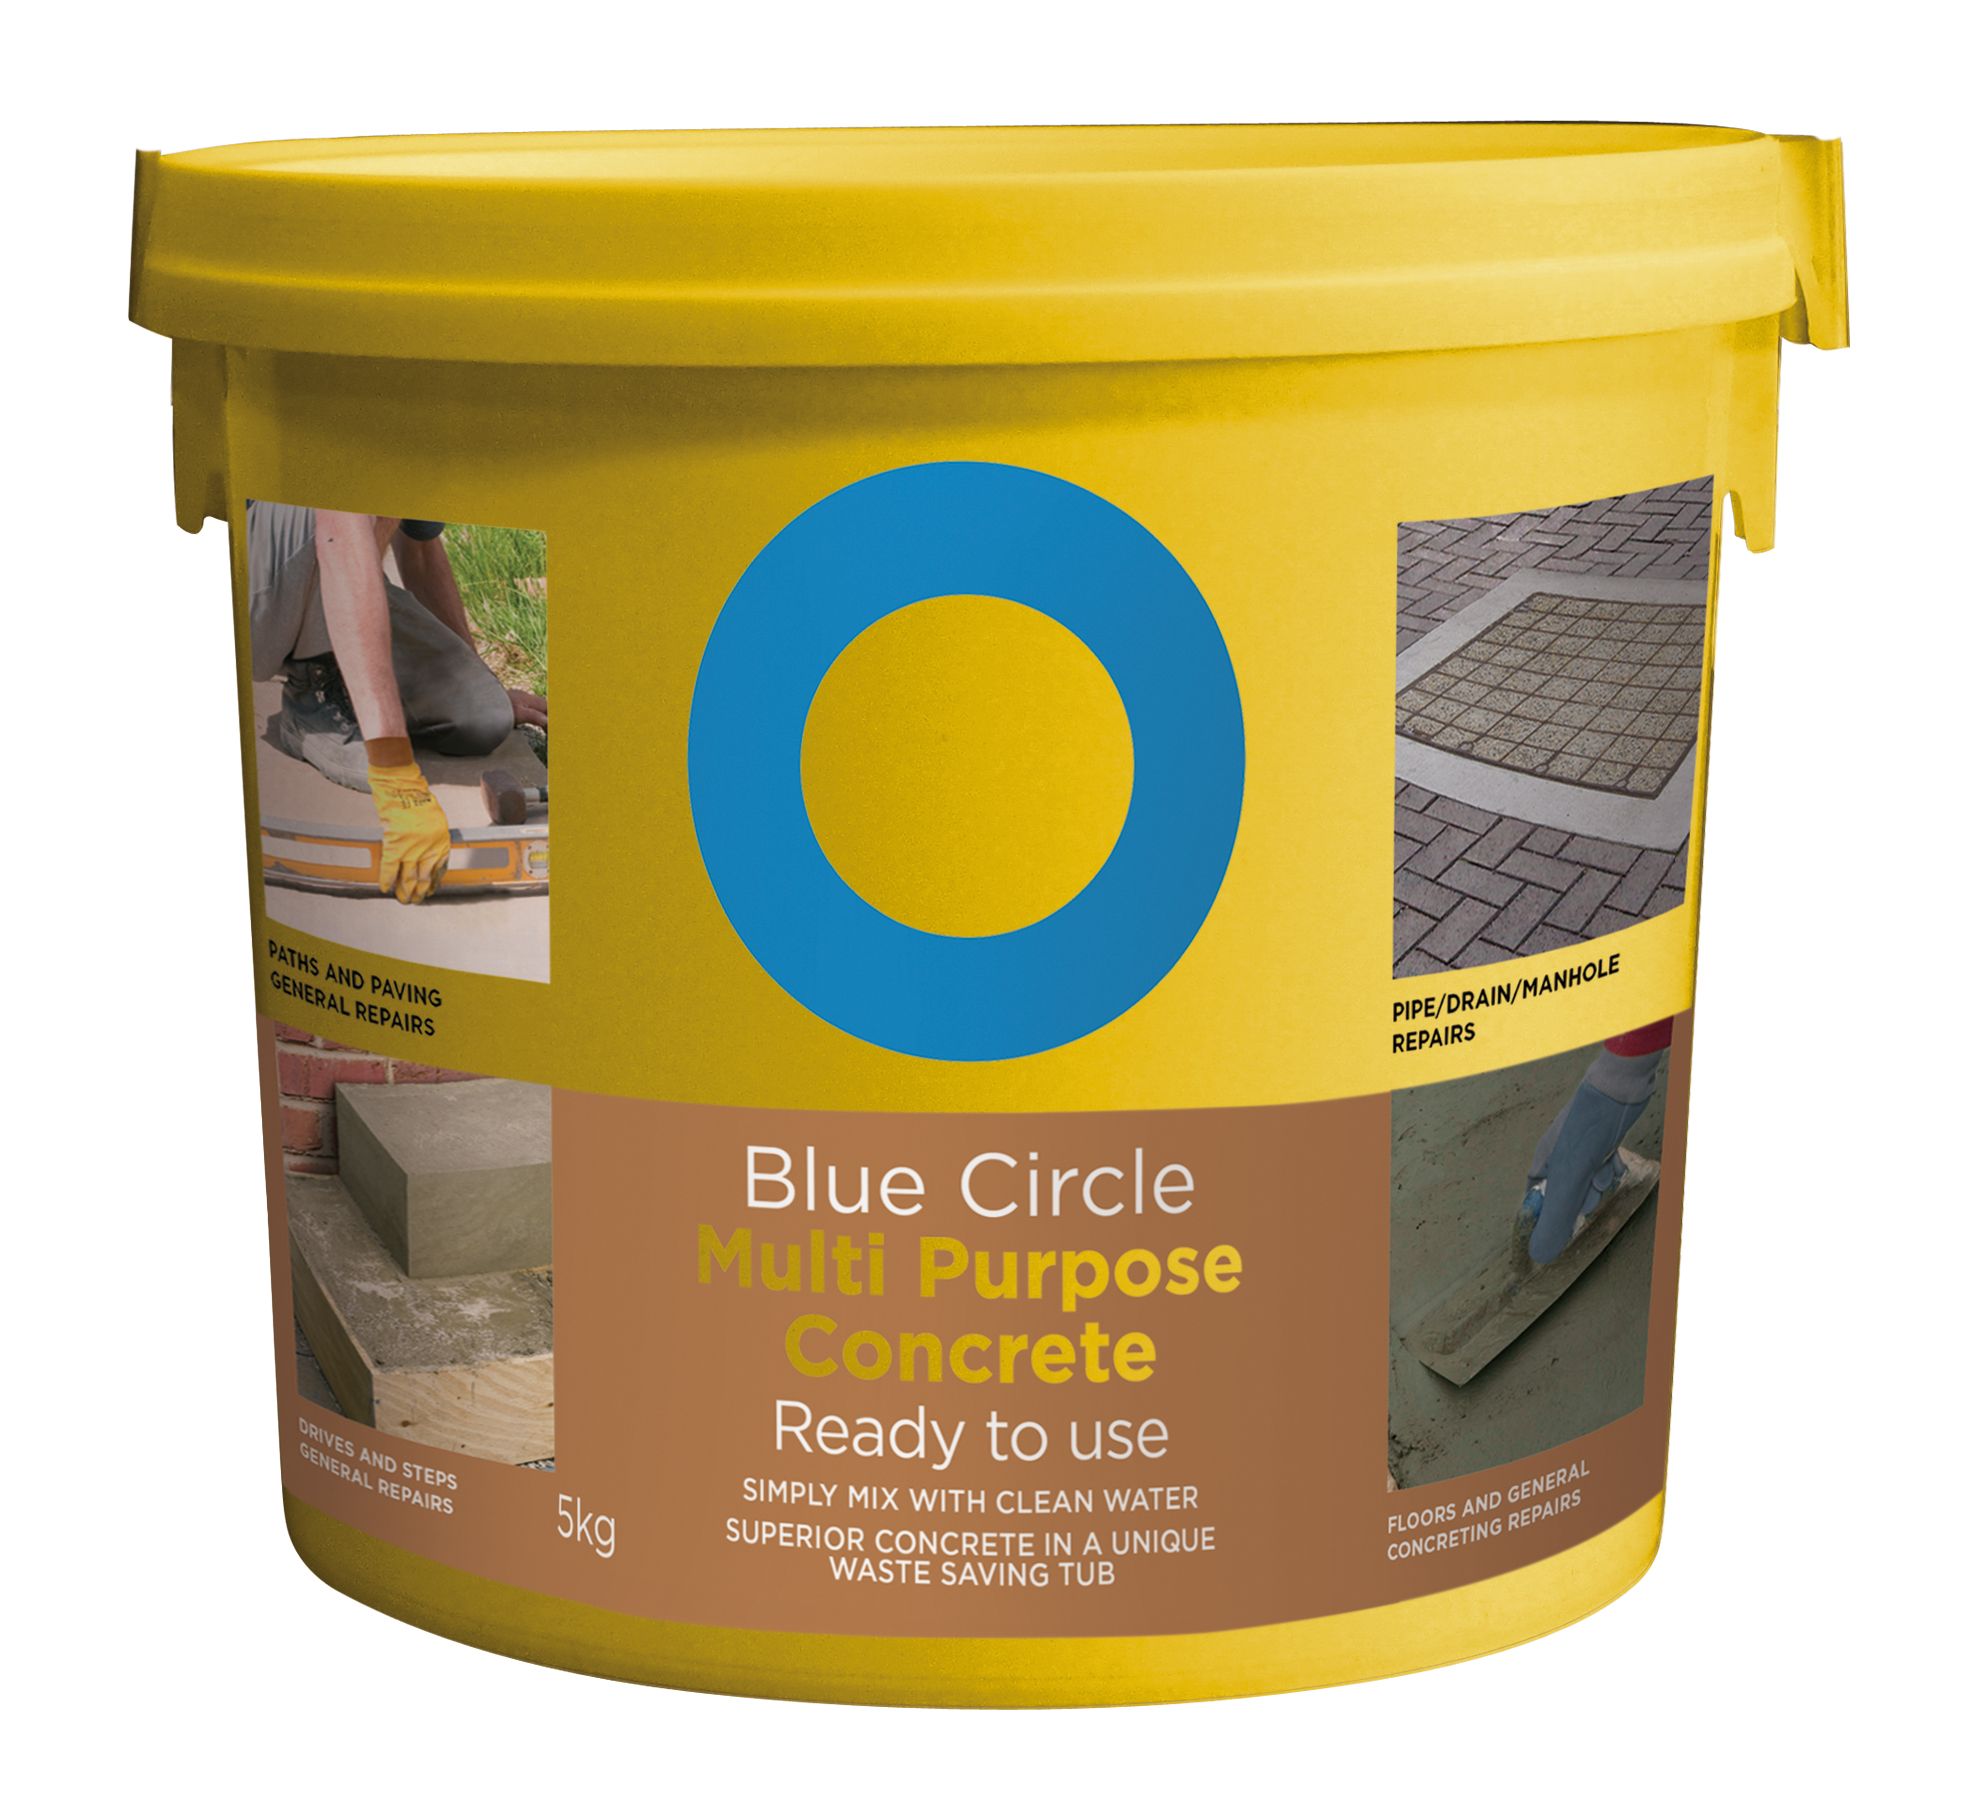 Blue Circle General Purpose Cement - 25kg